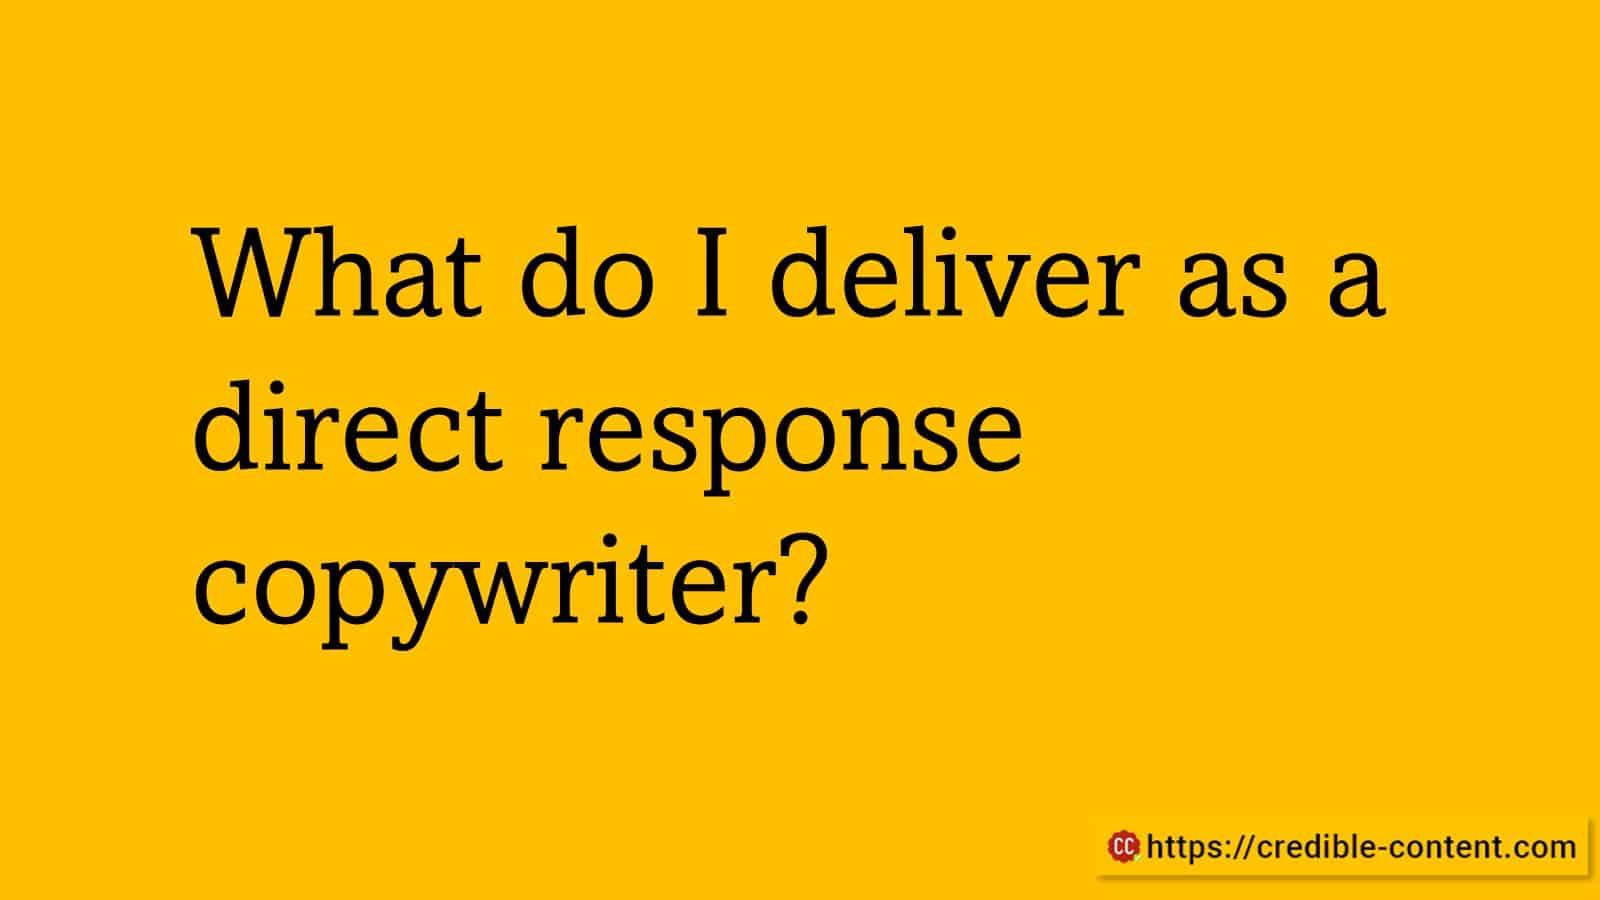 What do I deliver as a direct response copywriter?